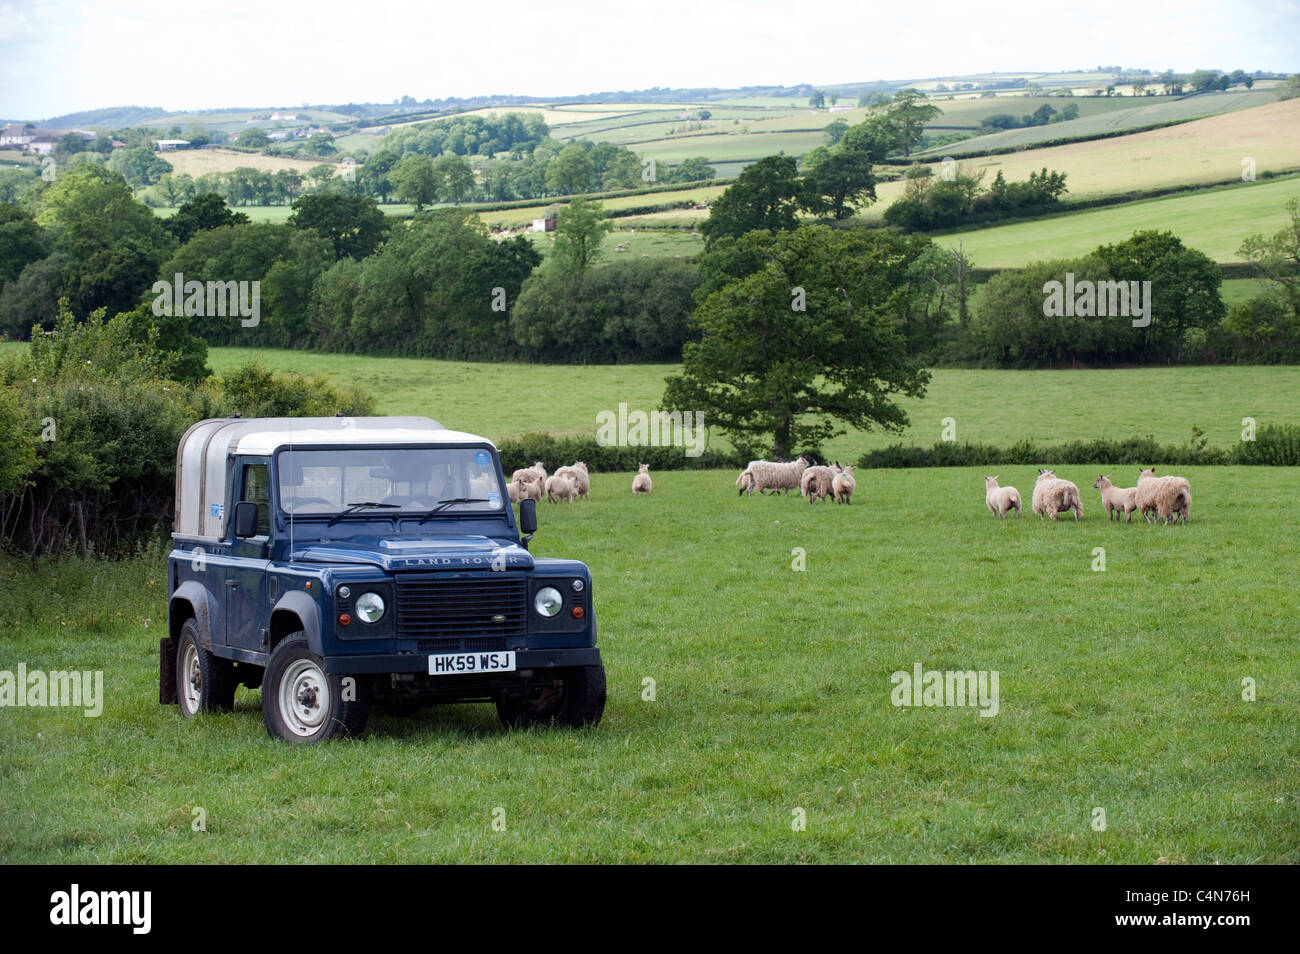 Autocollants 2 x One Life Farm il agriculture Land Rover 4x4 off road Drôle